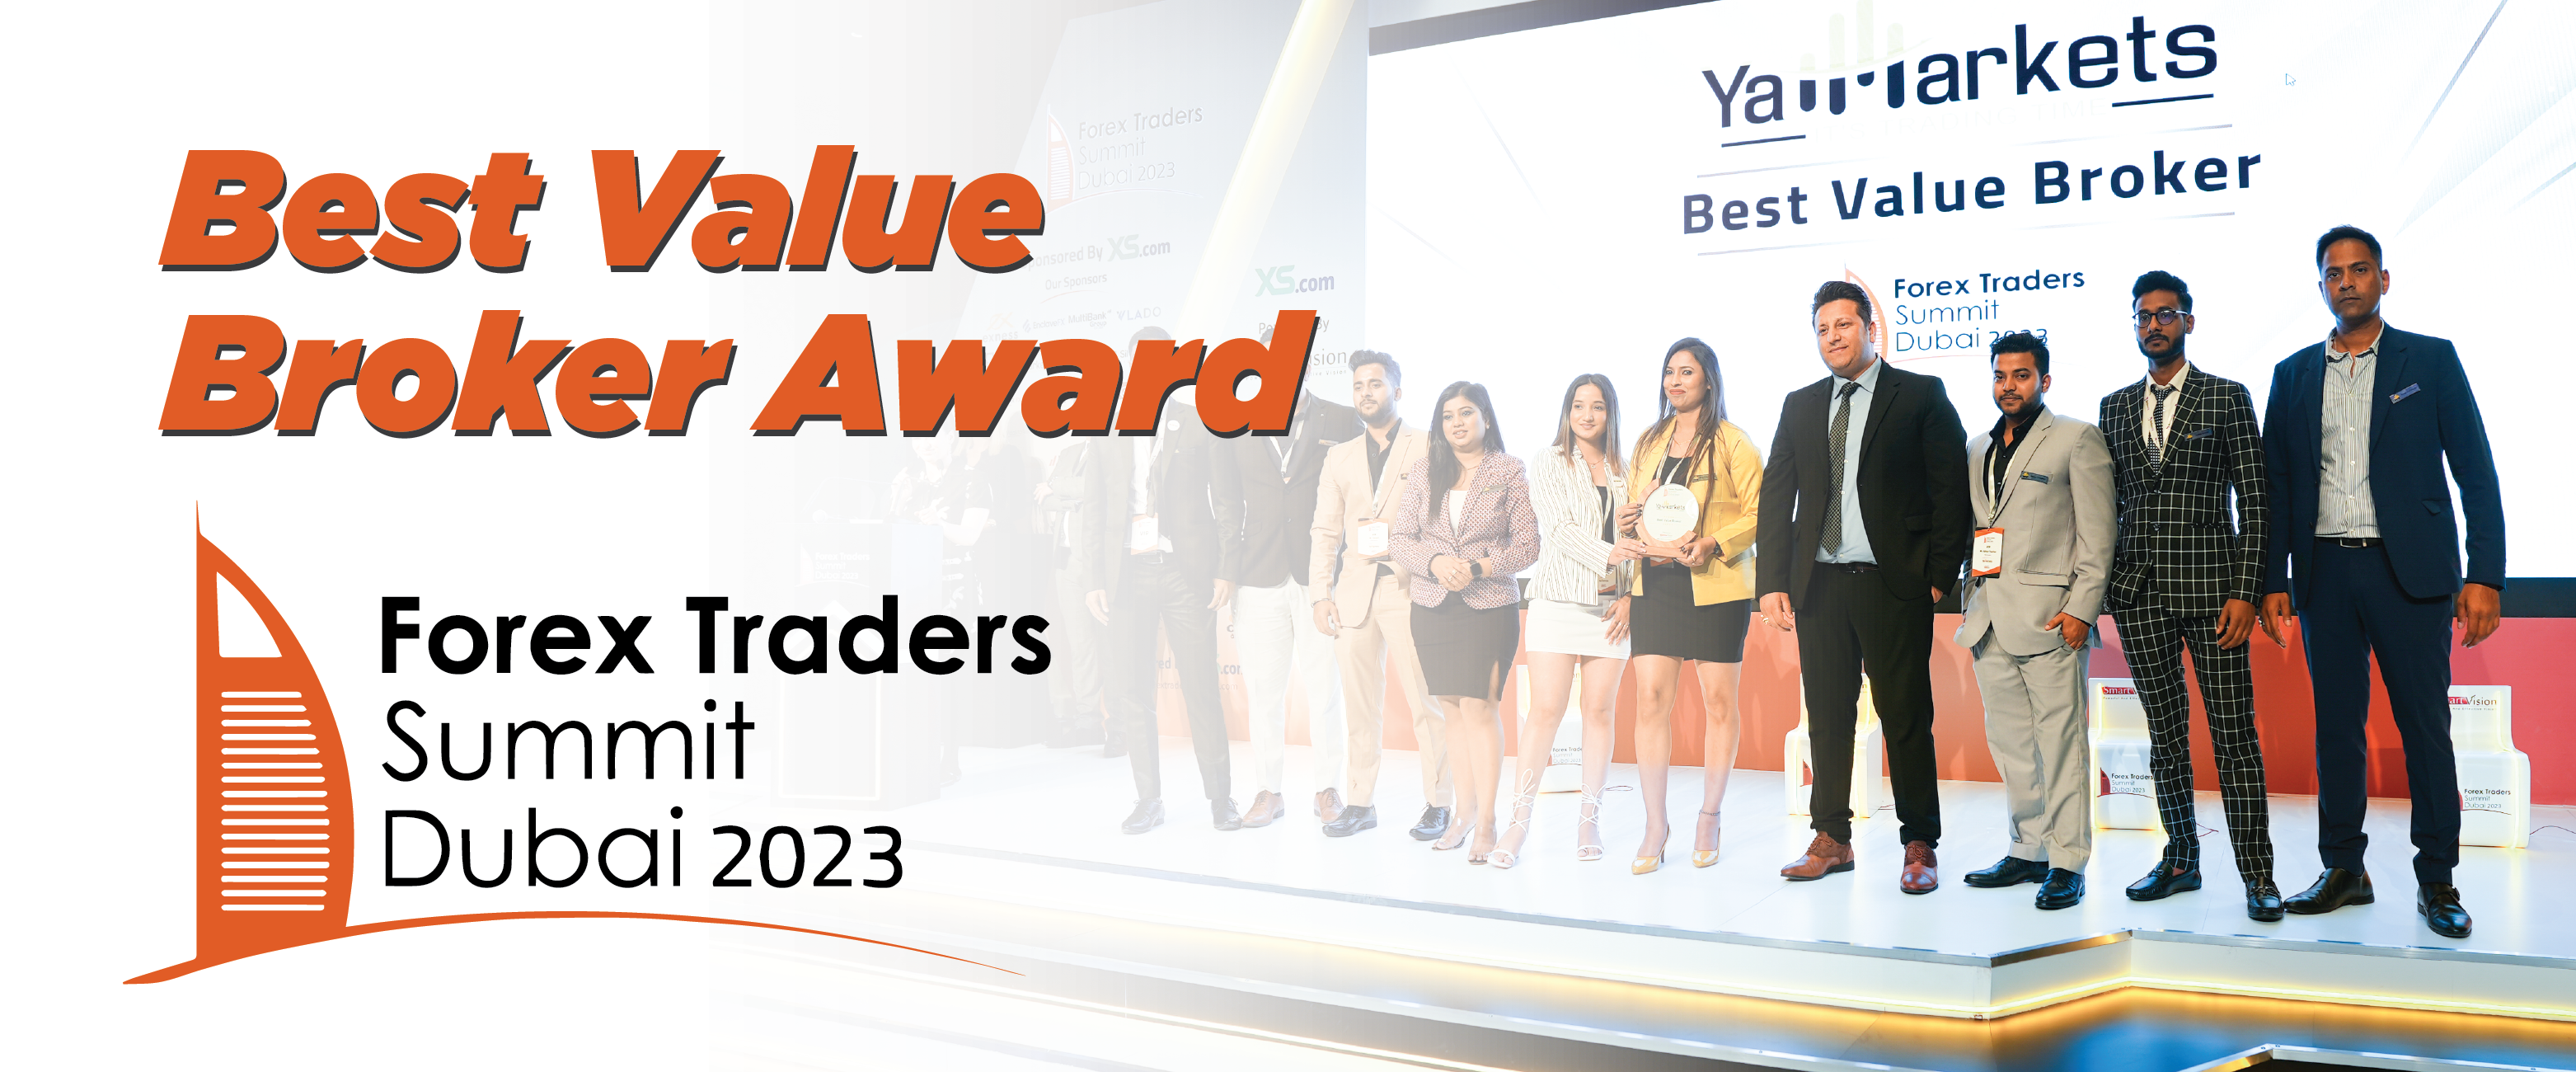 Best Value Broker Award at the Forex Summit 2023